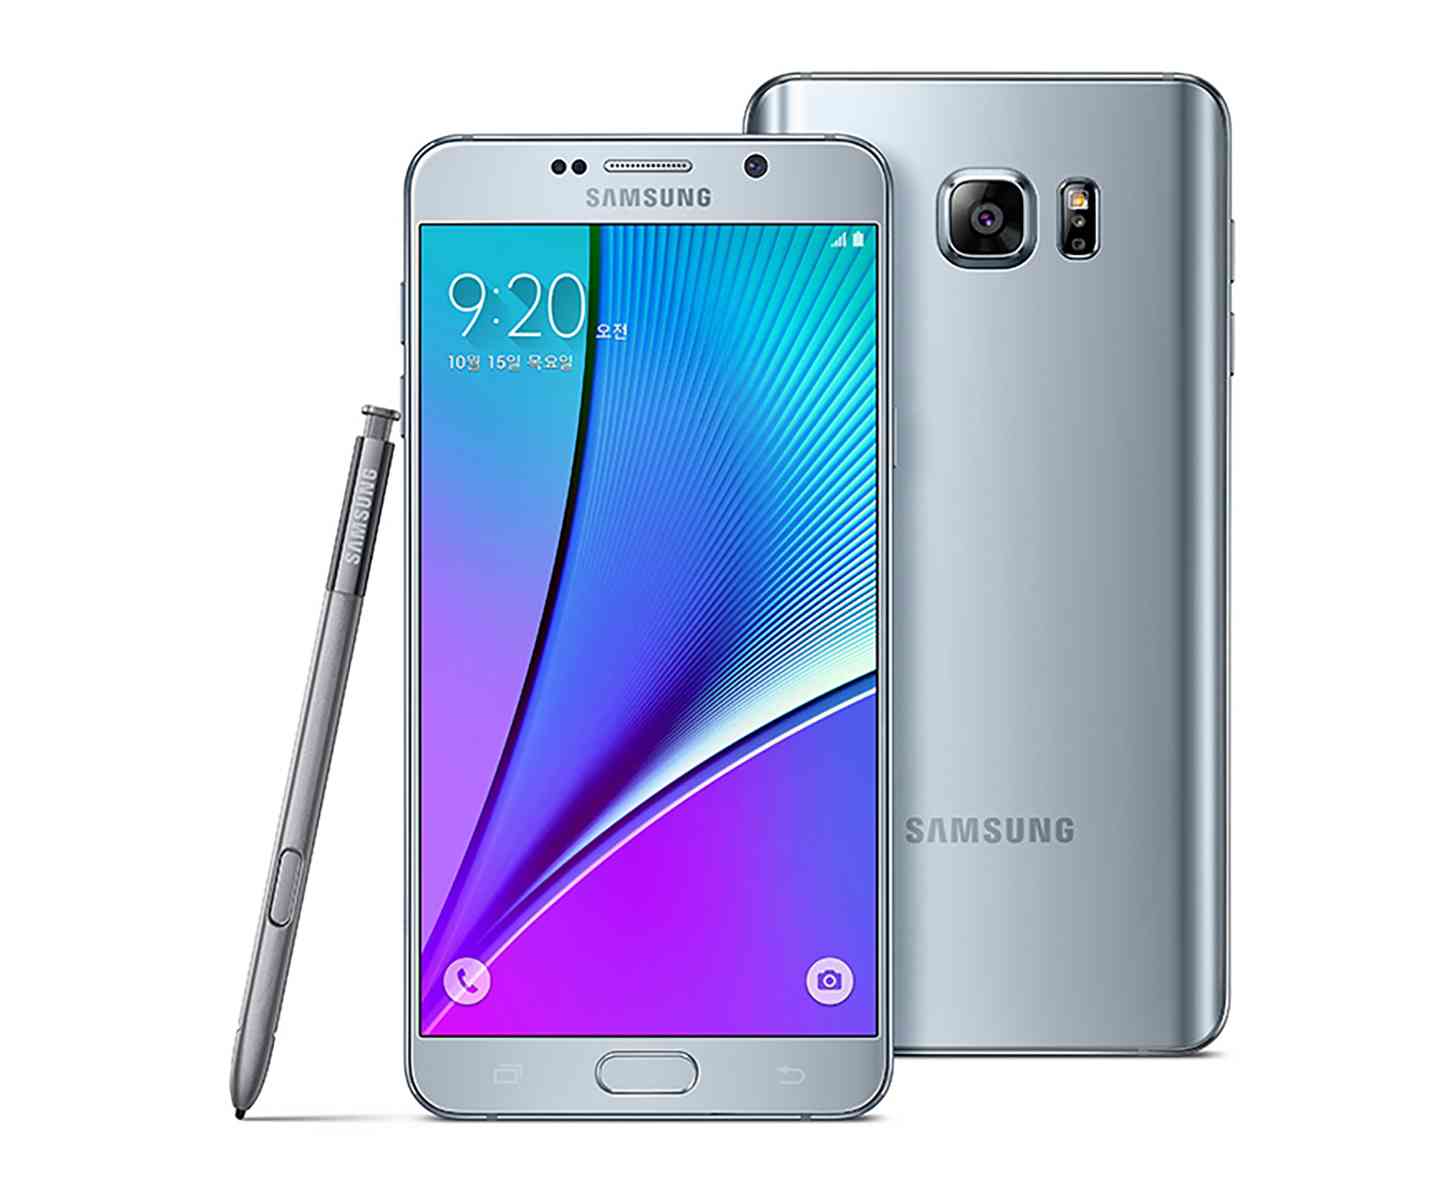 Samsung Galaxy Note 5 Silver Titanium large